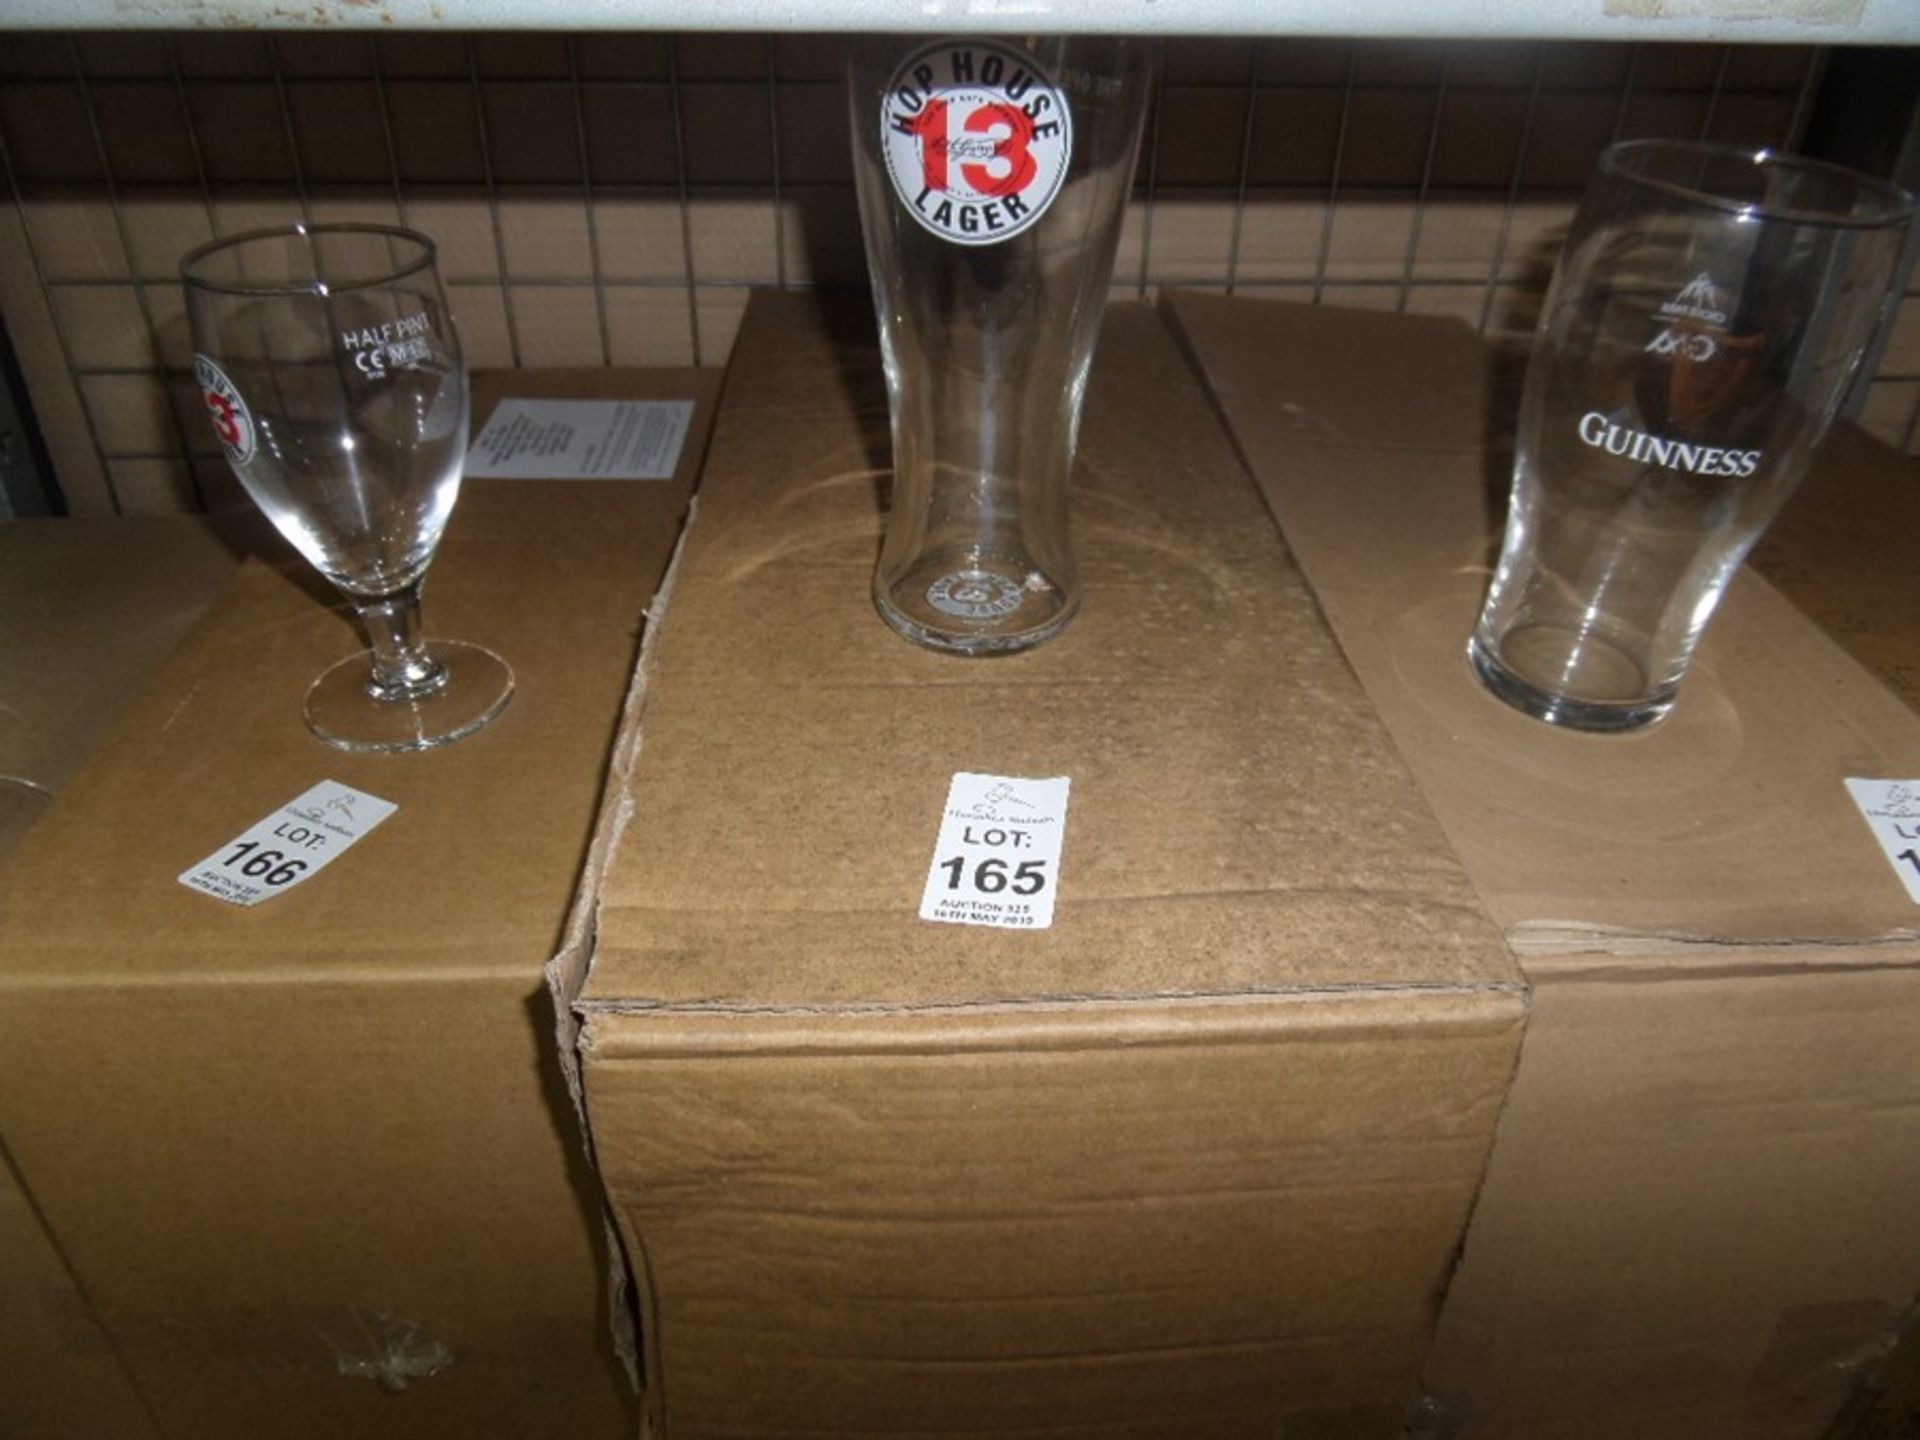 BOX OF NEW HOP HOUSE 13 PINT GLASSES